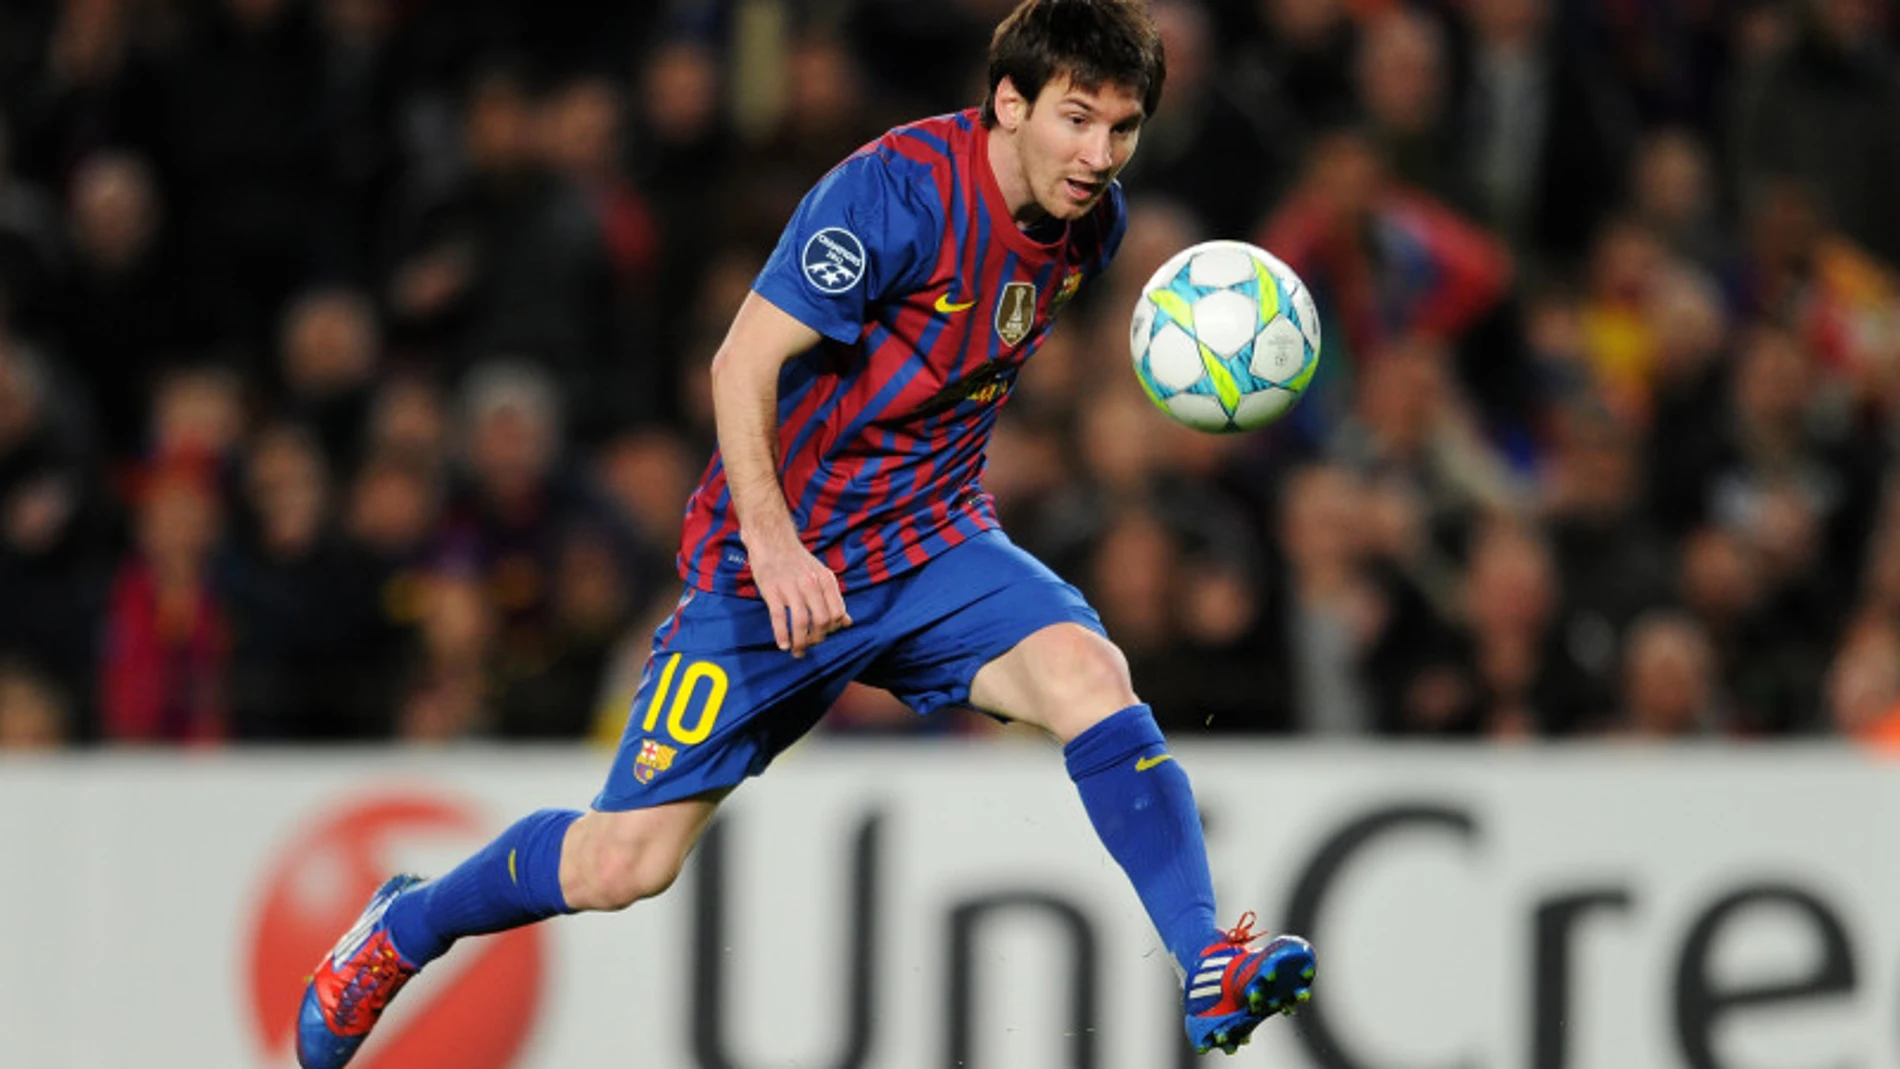 Lionel Messi en aquella noche frente al Bayer Leverkusen